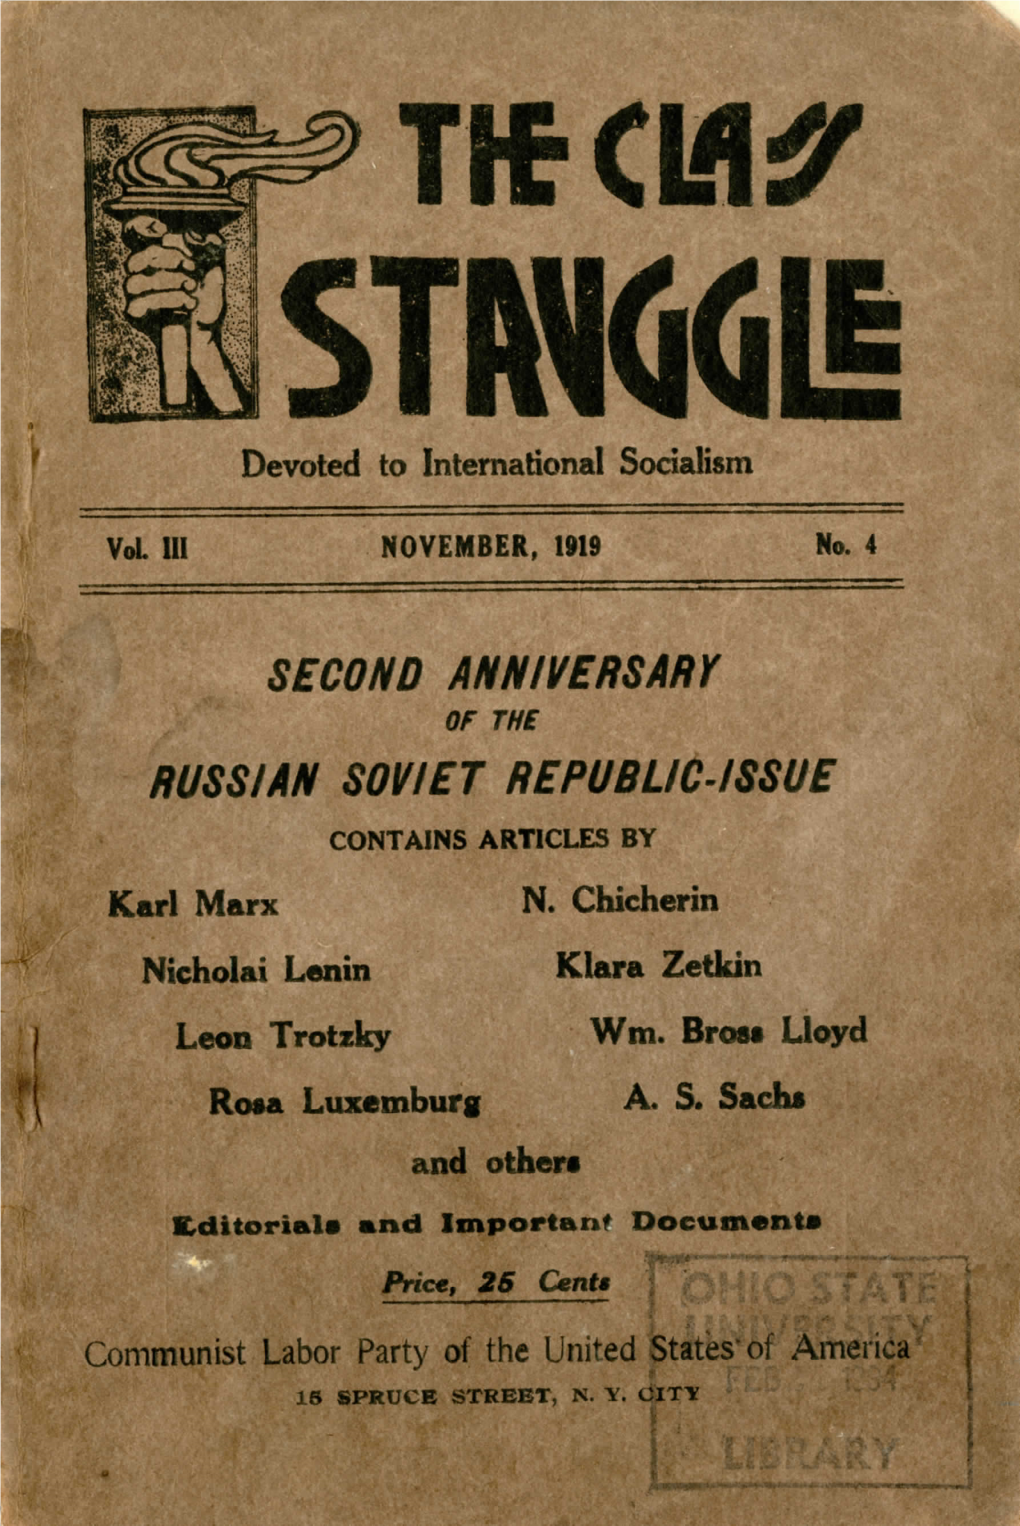 Volume III November, 1919 No. 4